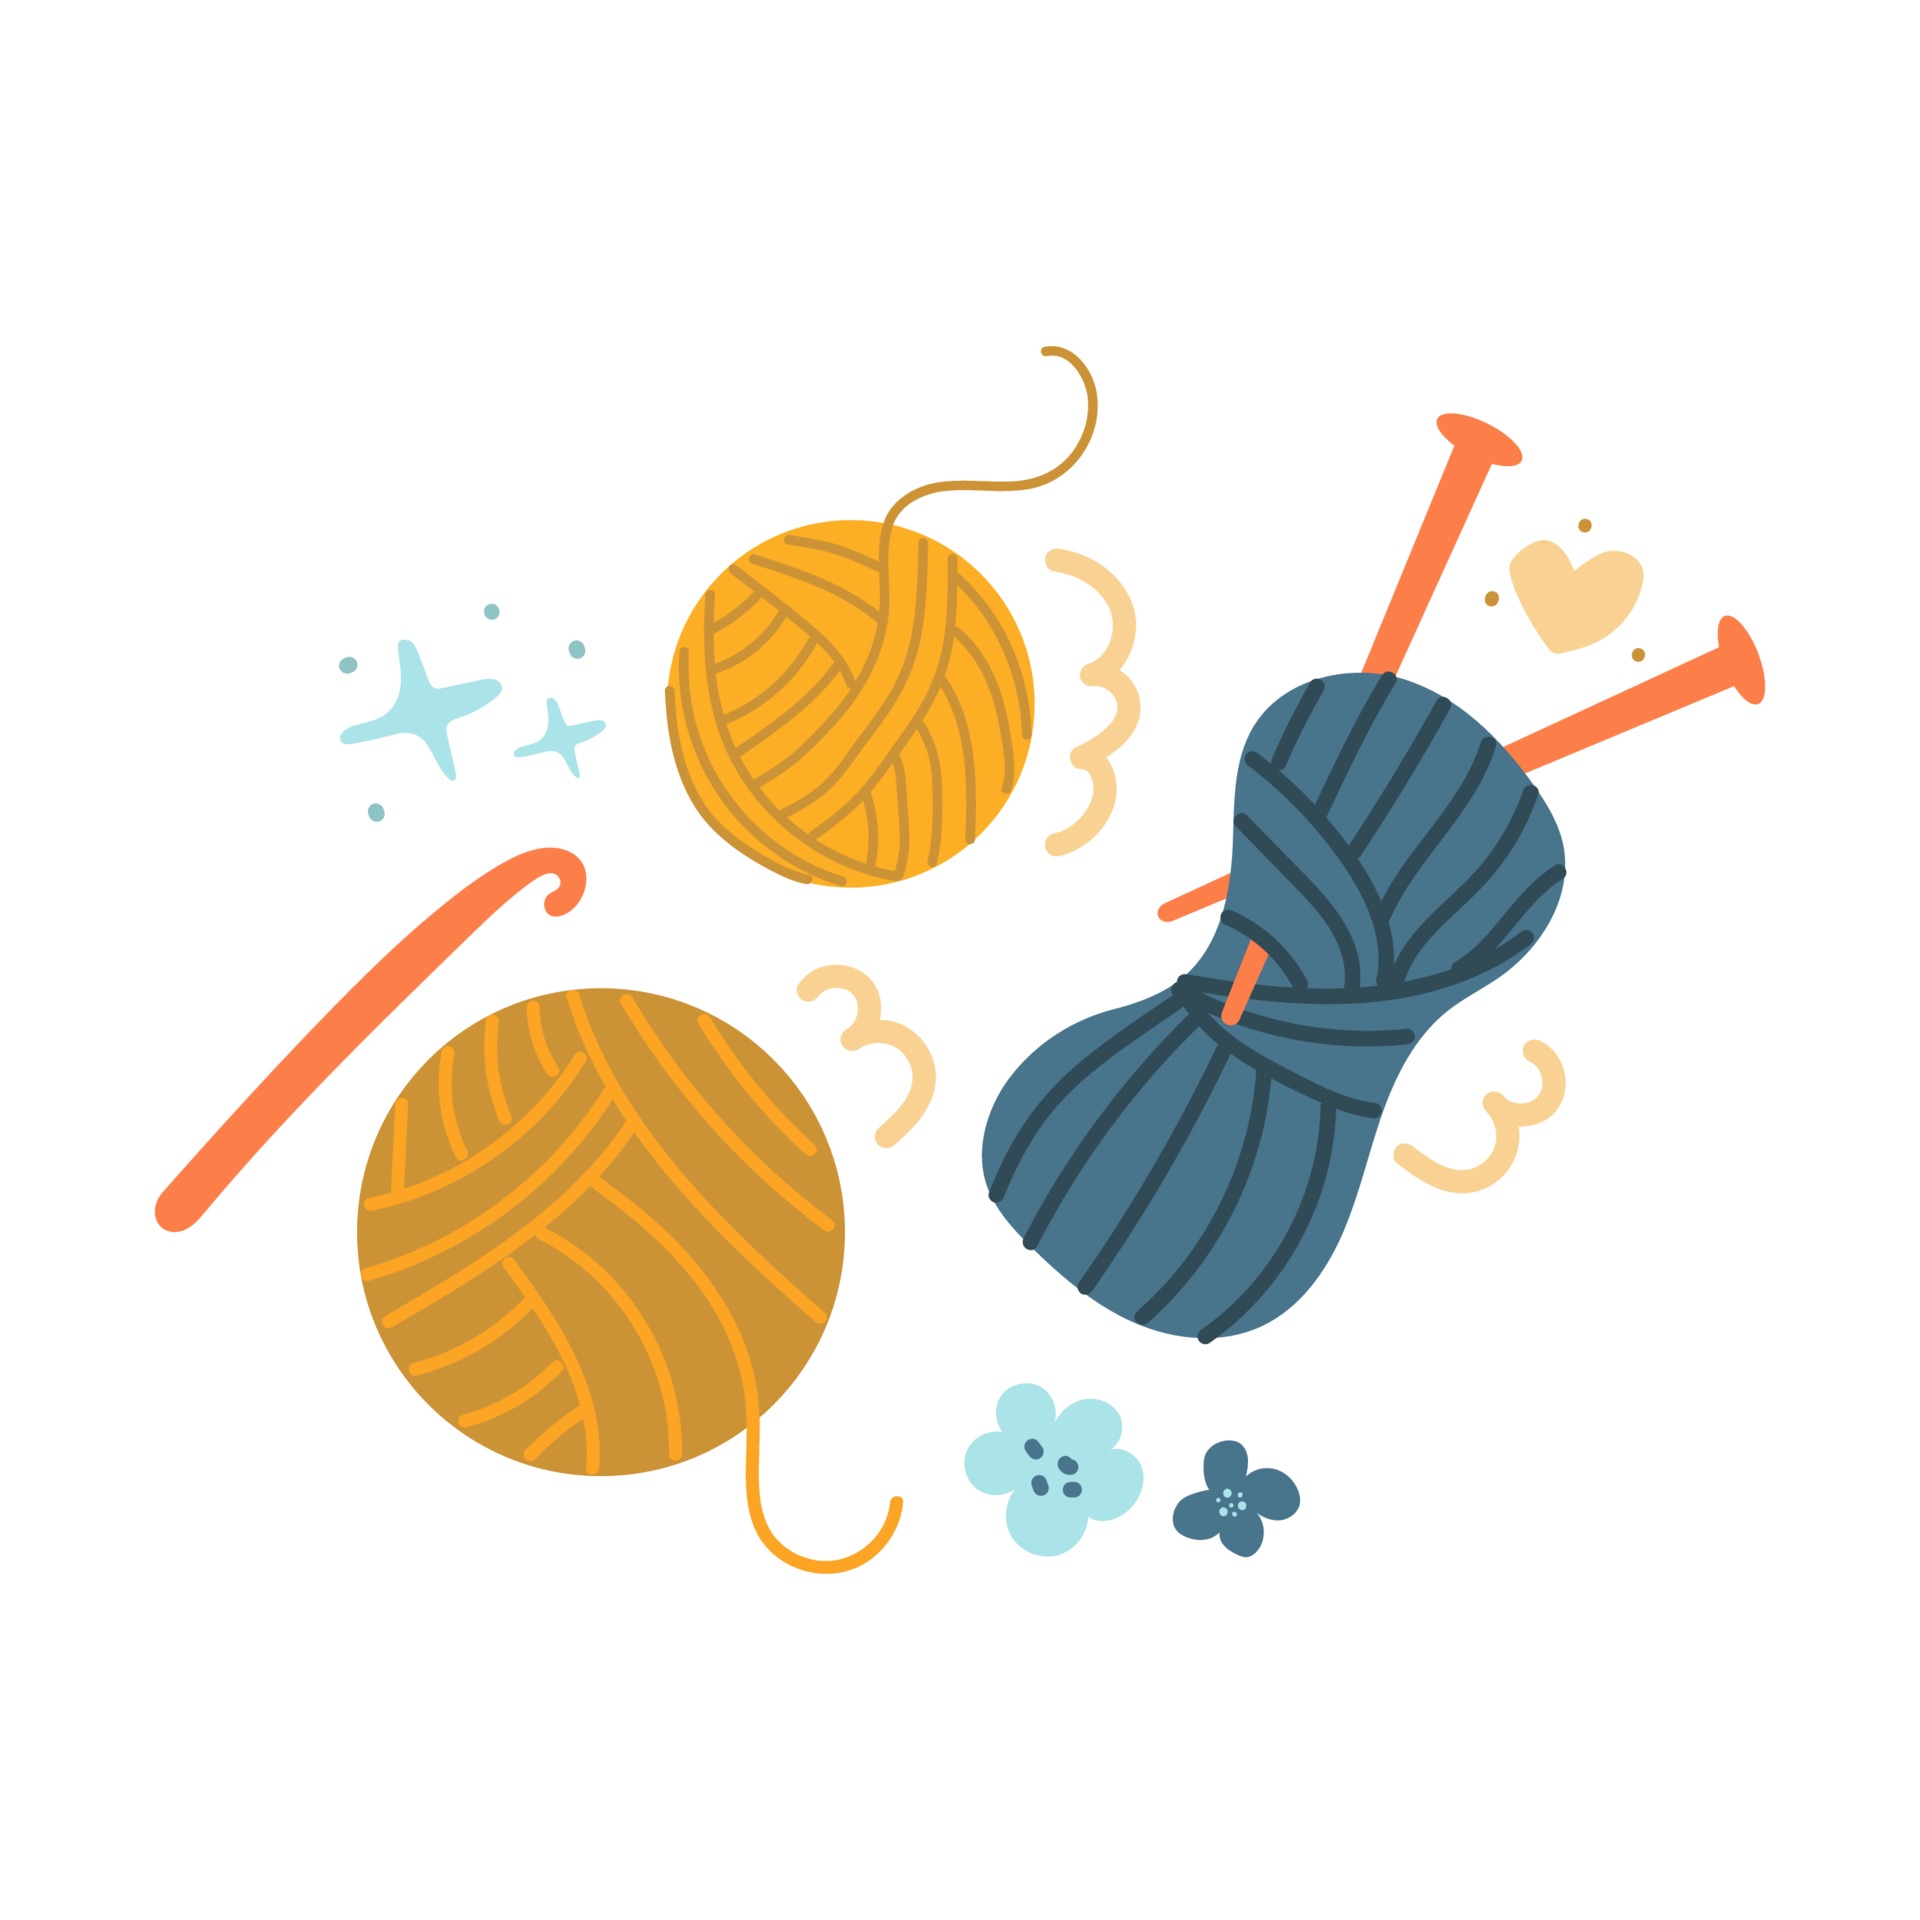 Crochet hook, knitting needles and threads - vector full color  illustration. Balls of yarn and knitting tools. Set for handmade, hand  knitting. Stock Vector